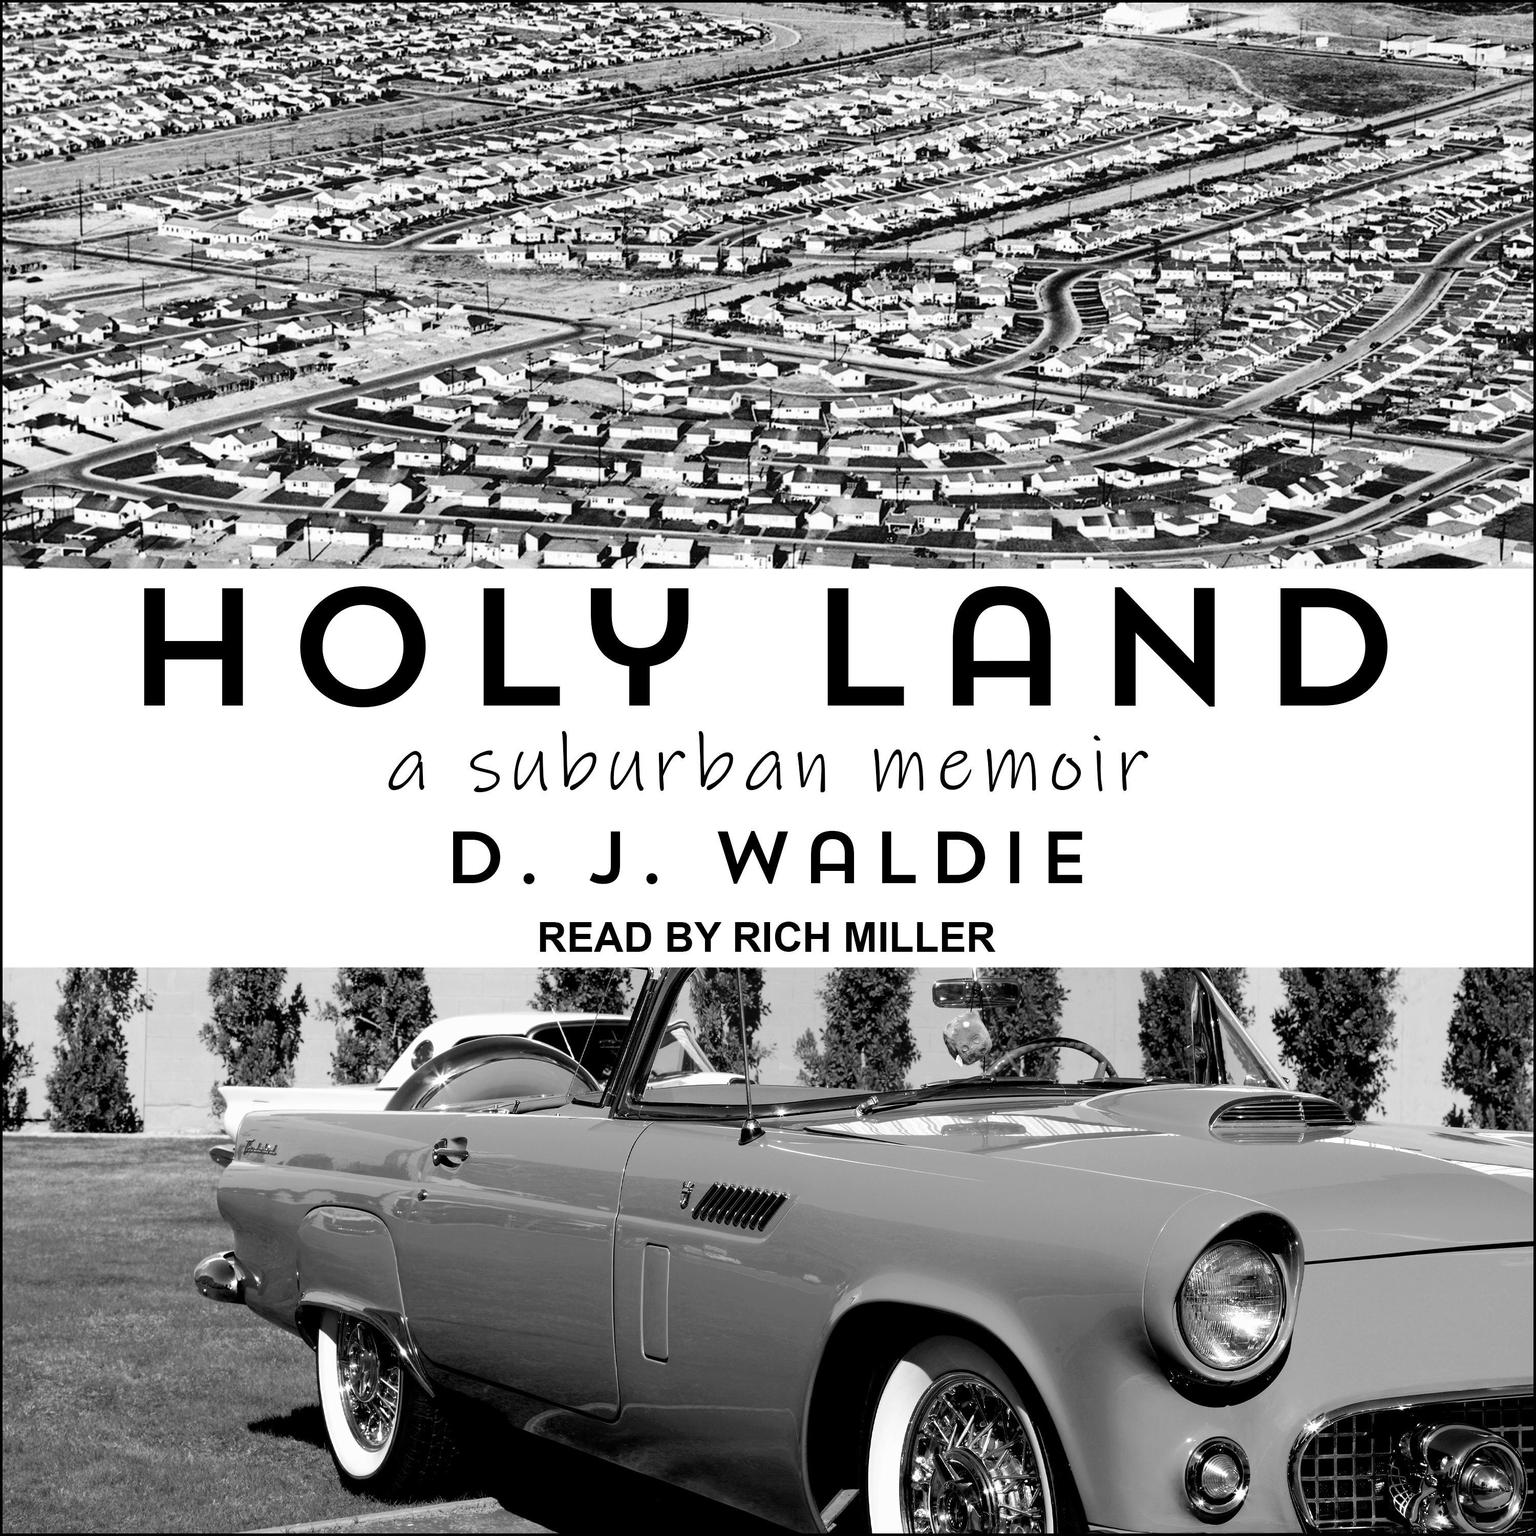 Holy Land: A Suburban Memoir Audiobook, by DJ Waldie